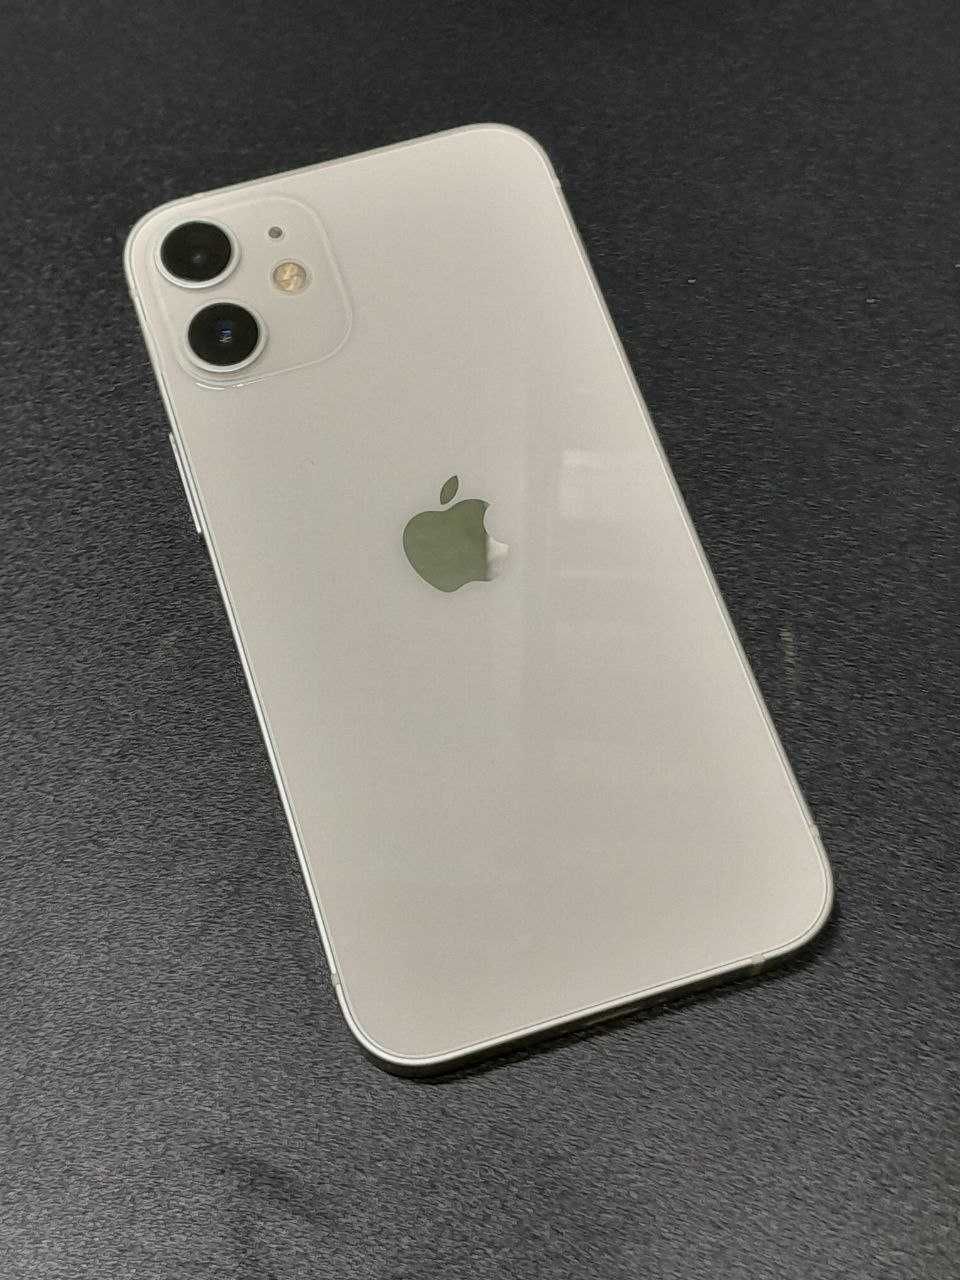 Apple iPhone 12 mini Уральск 0701 лот 332233